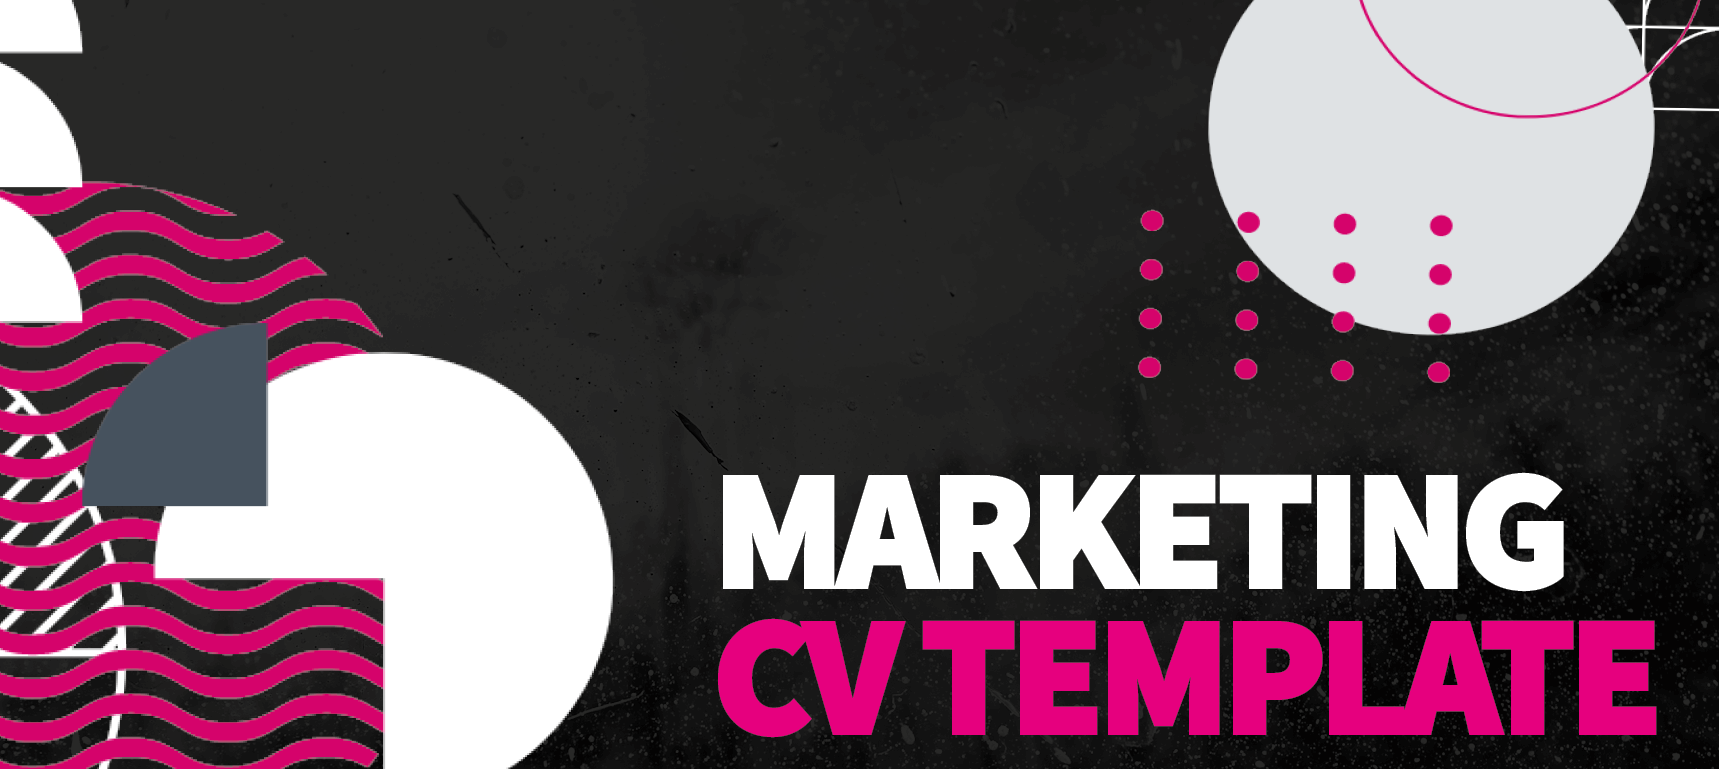 Marketing CV template